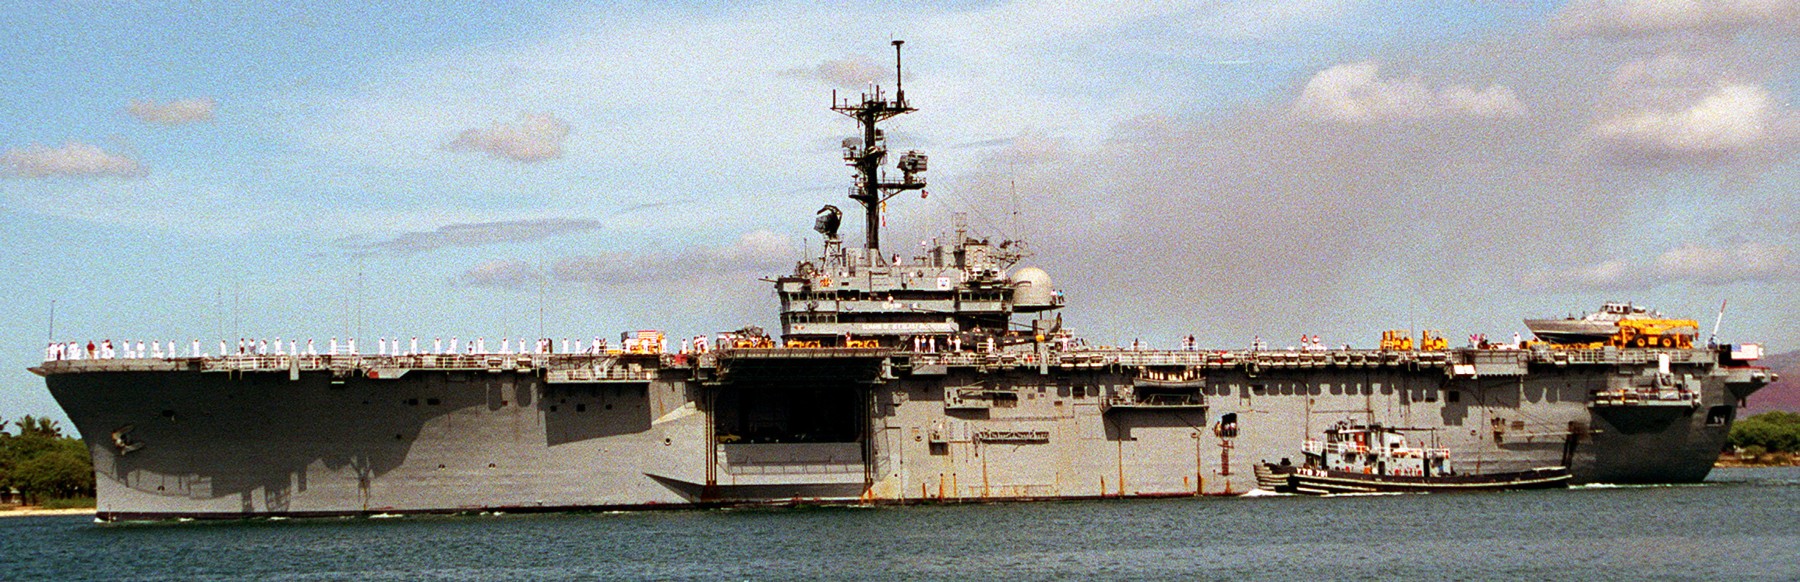 lph-10 uss tripoli iwo jima class amphibious assault ship landing platform helicopter us navy 26 pearl harbor hawaii